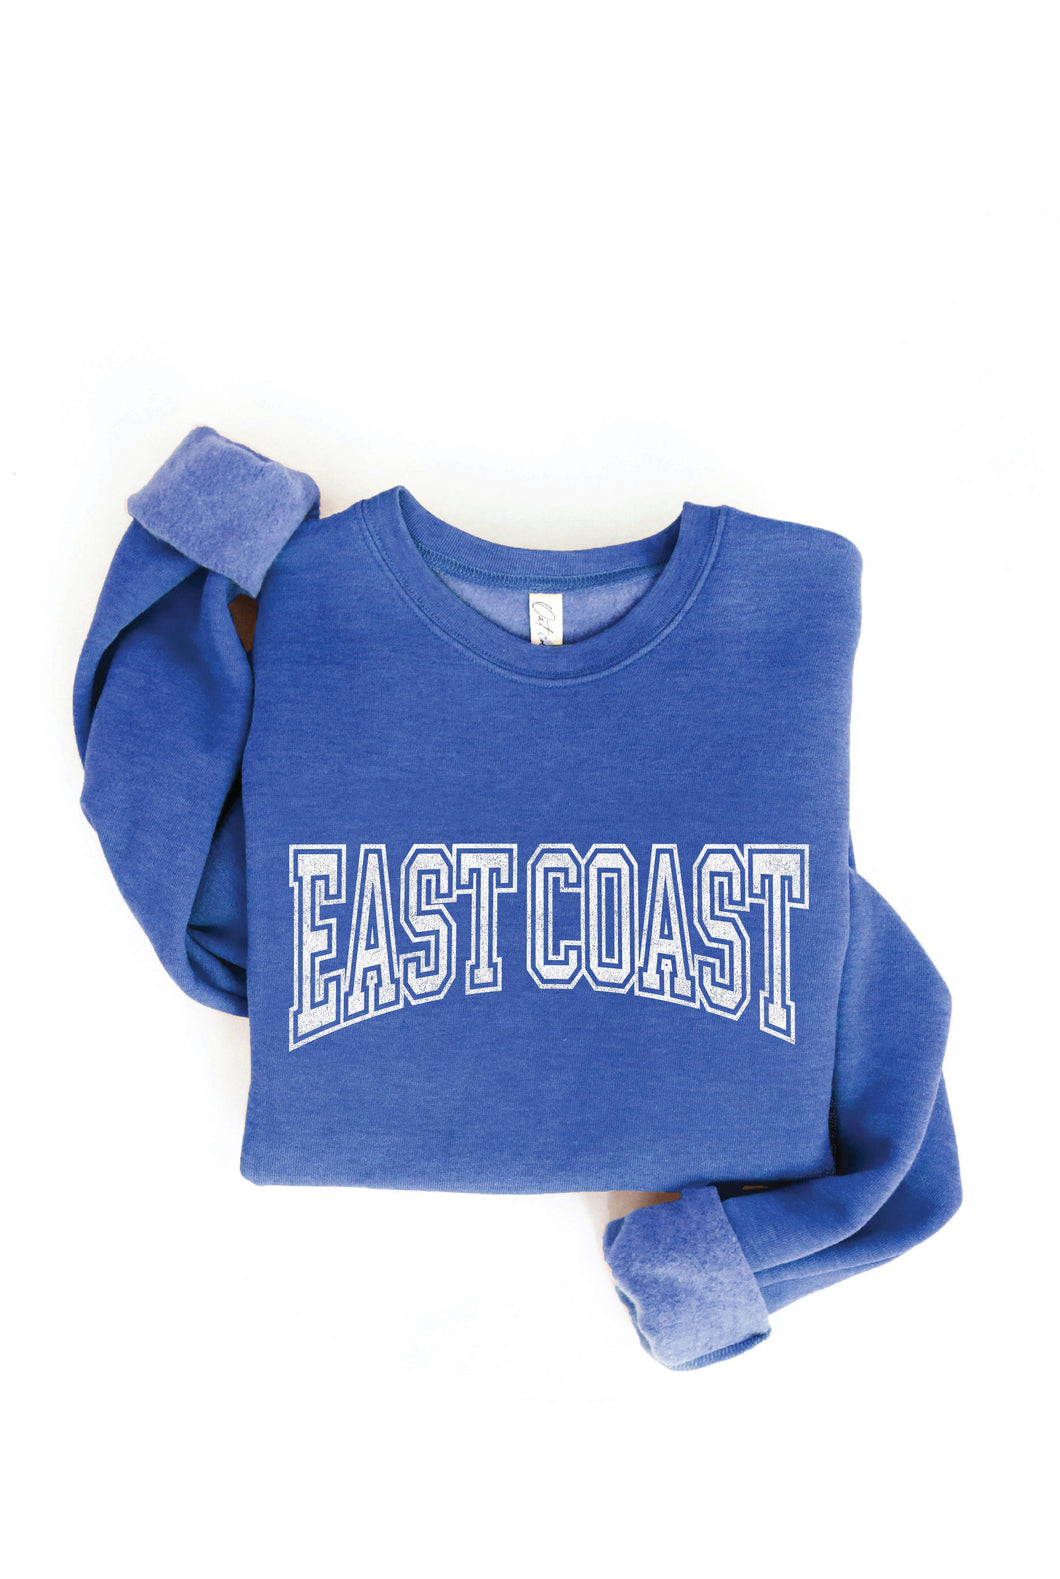 East Coast Sweatshirt Heather Royal